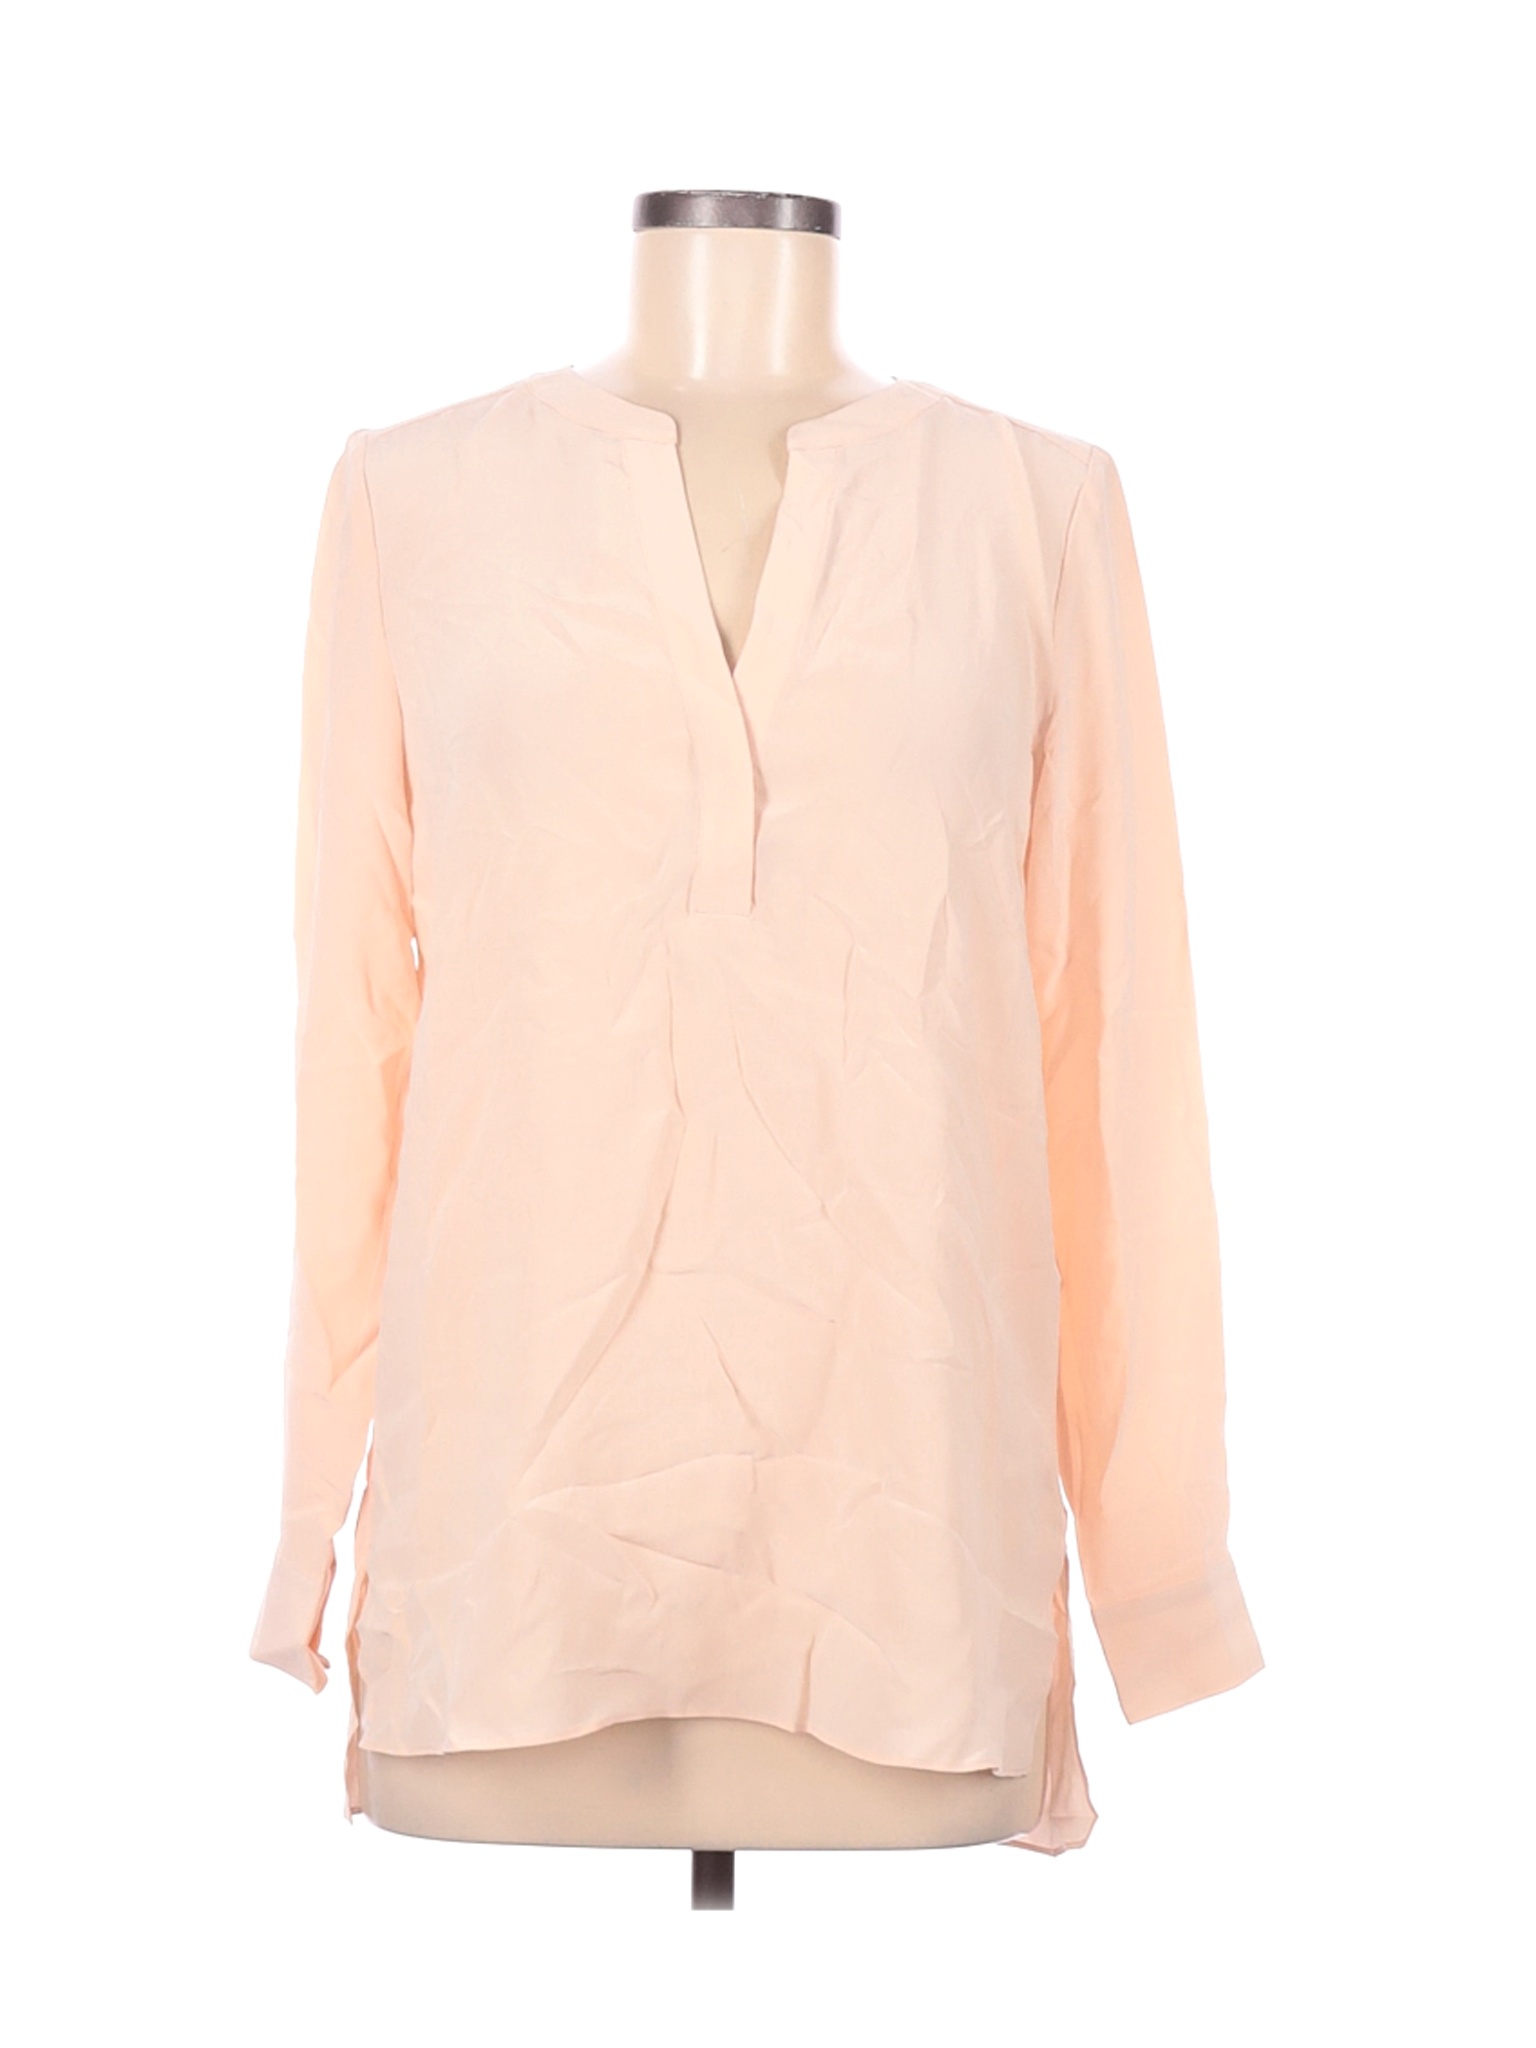 Label Rachel Roy Women Pink Long Sleeve Silk Top S | eBay